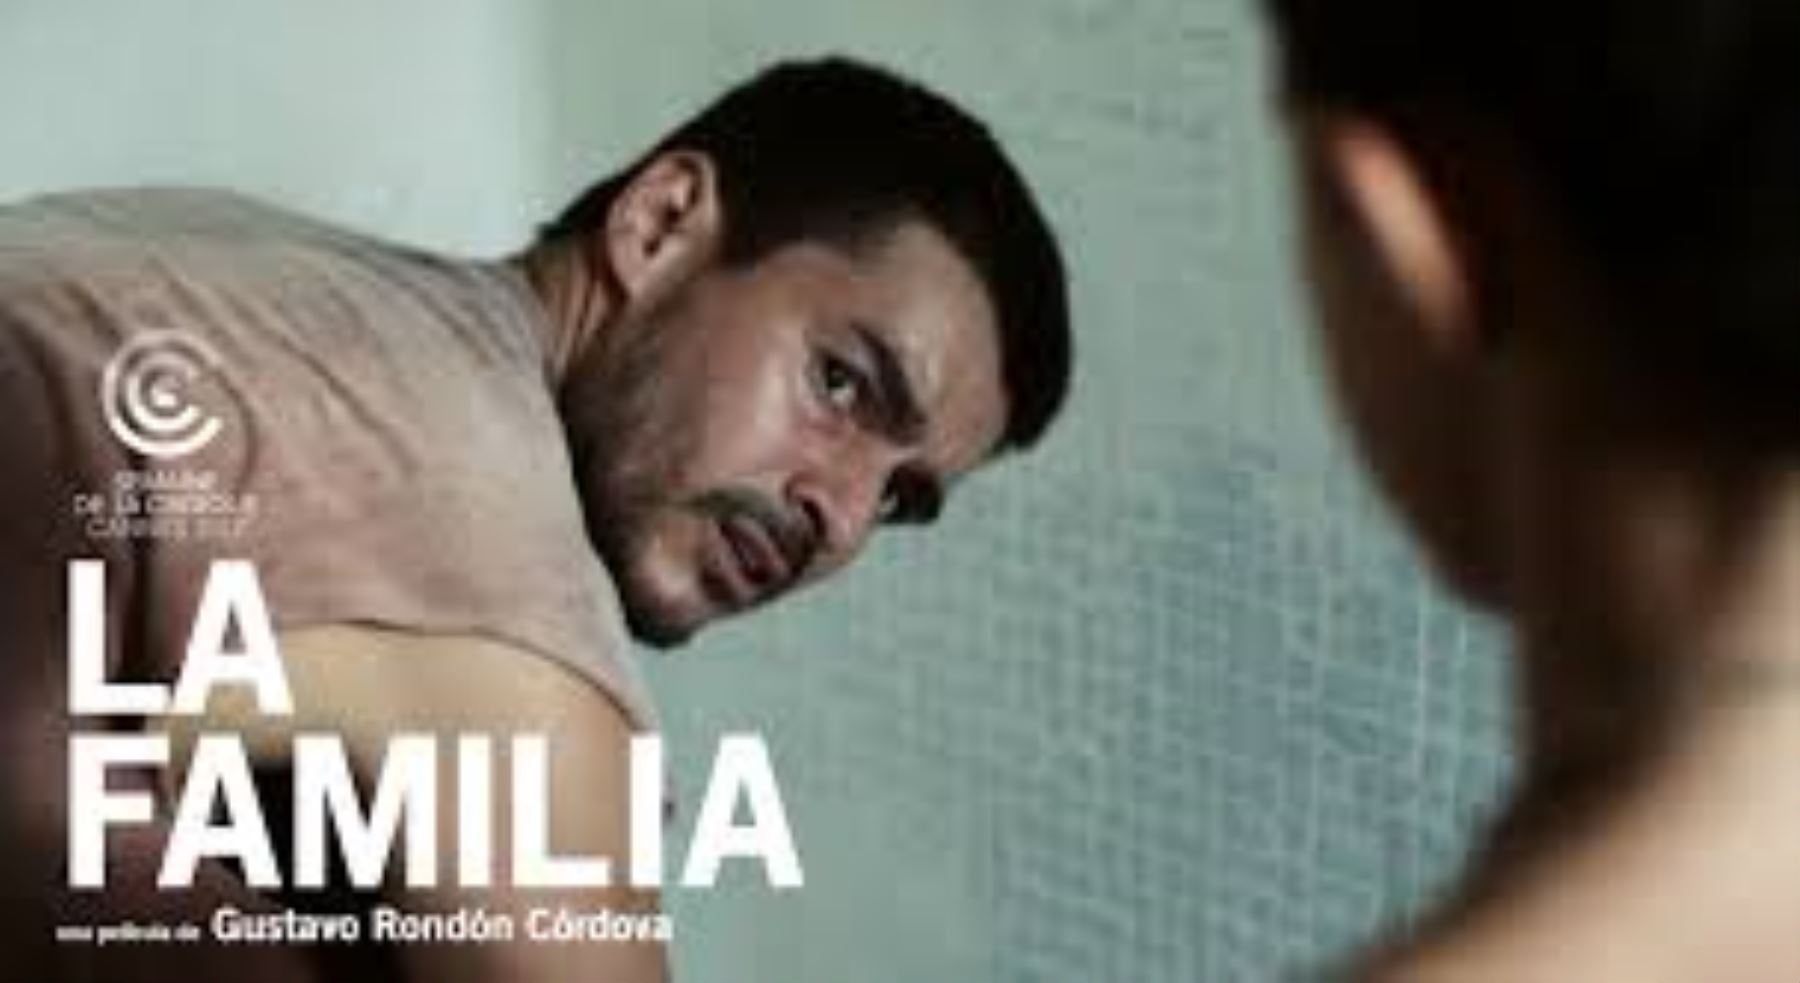 Escena de la película venezolana "La familia".